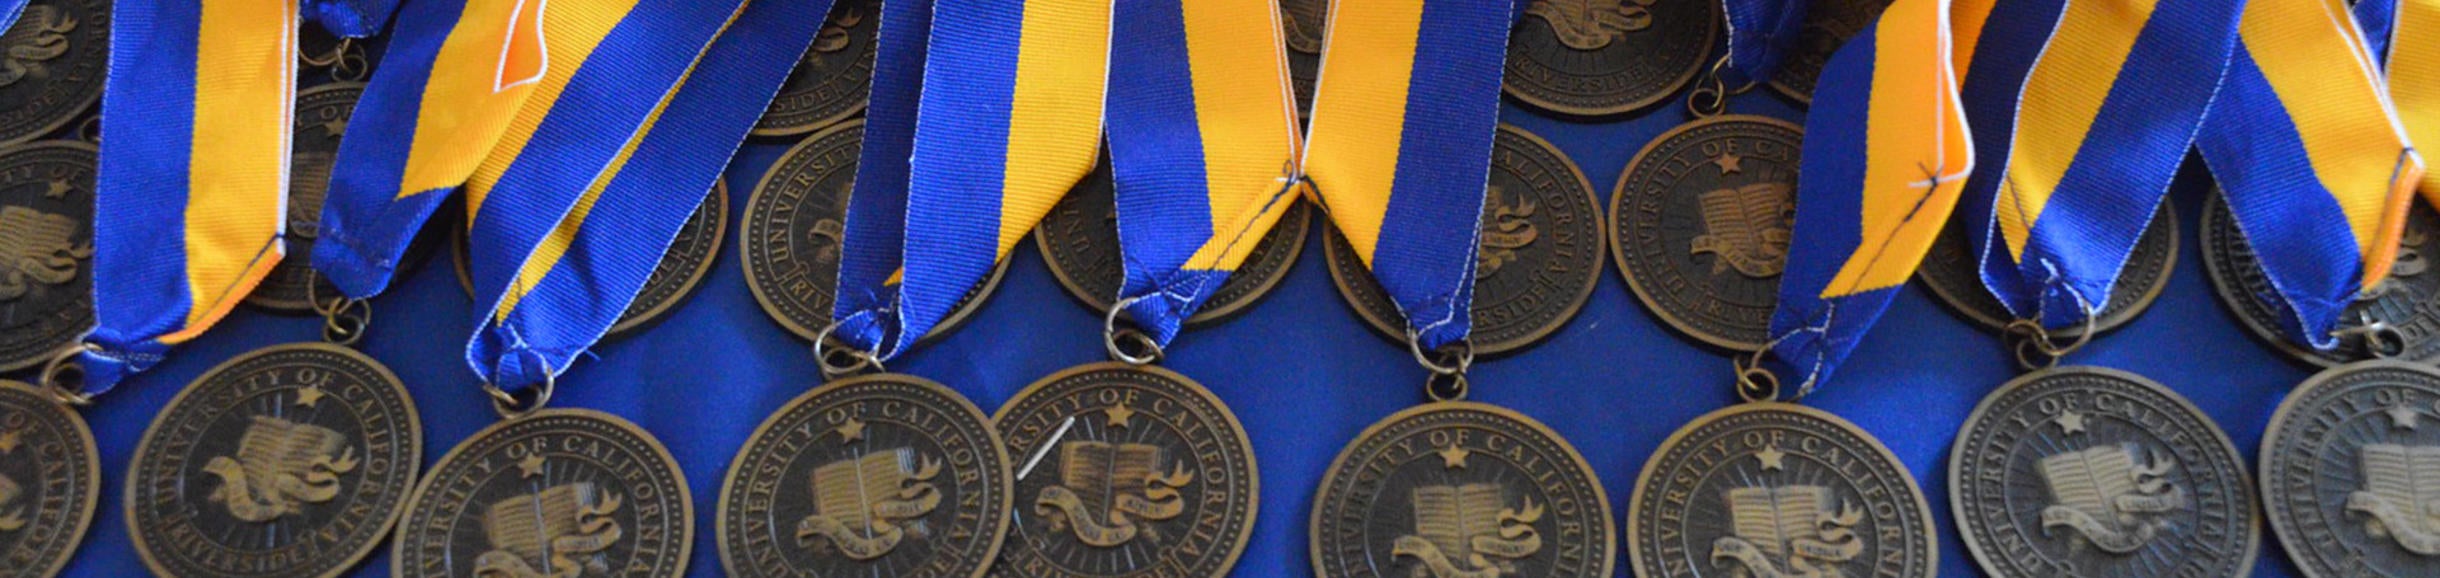 UCR-Medals